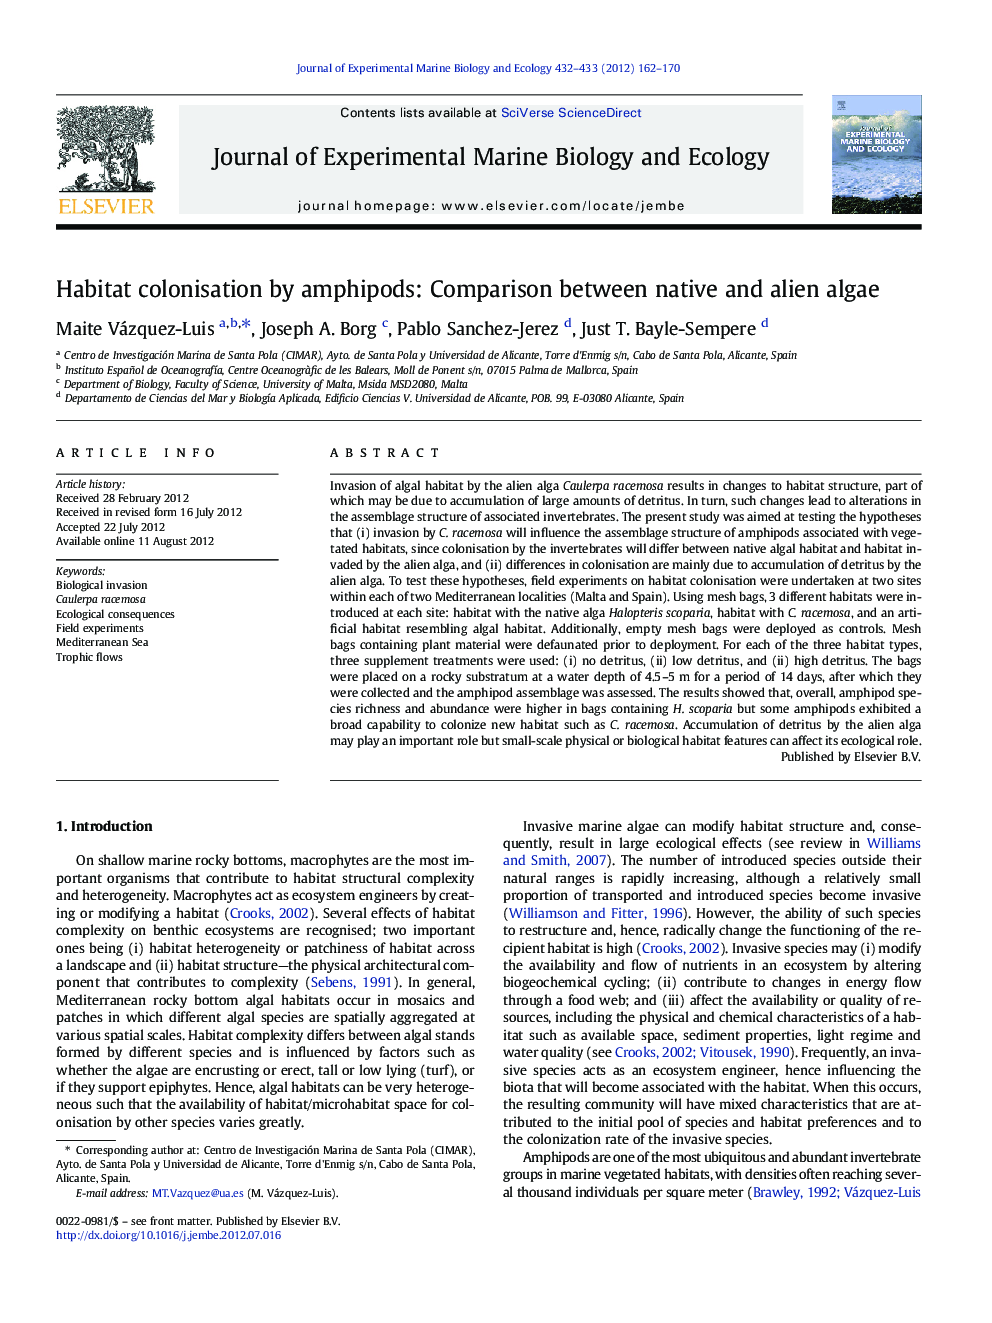 Habitat colonisation by amphipods: Comparison between native and alien algae